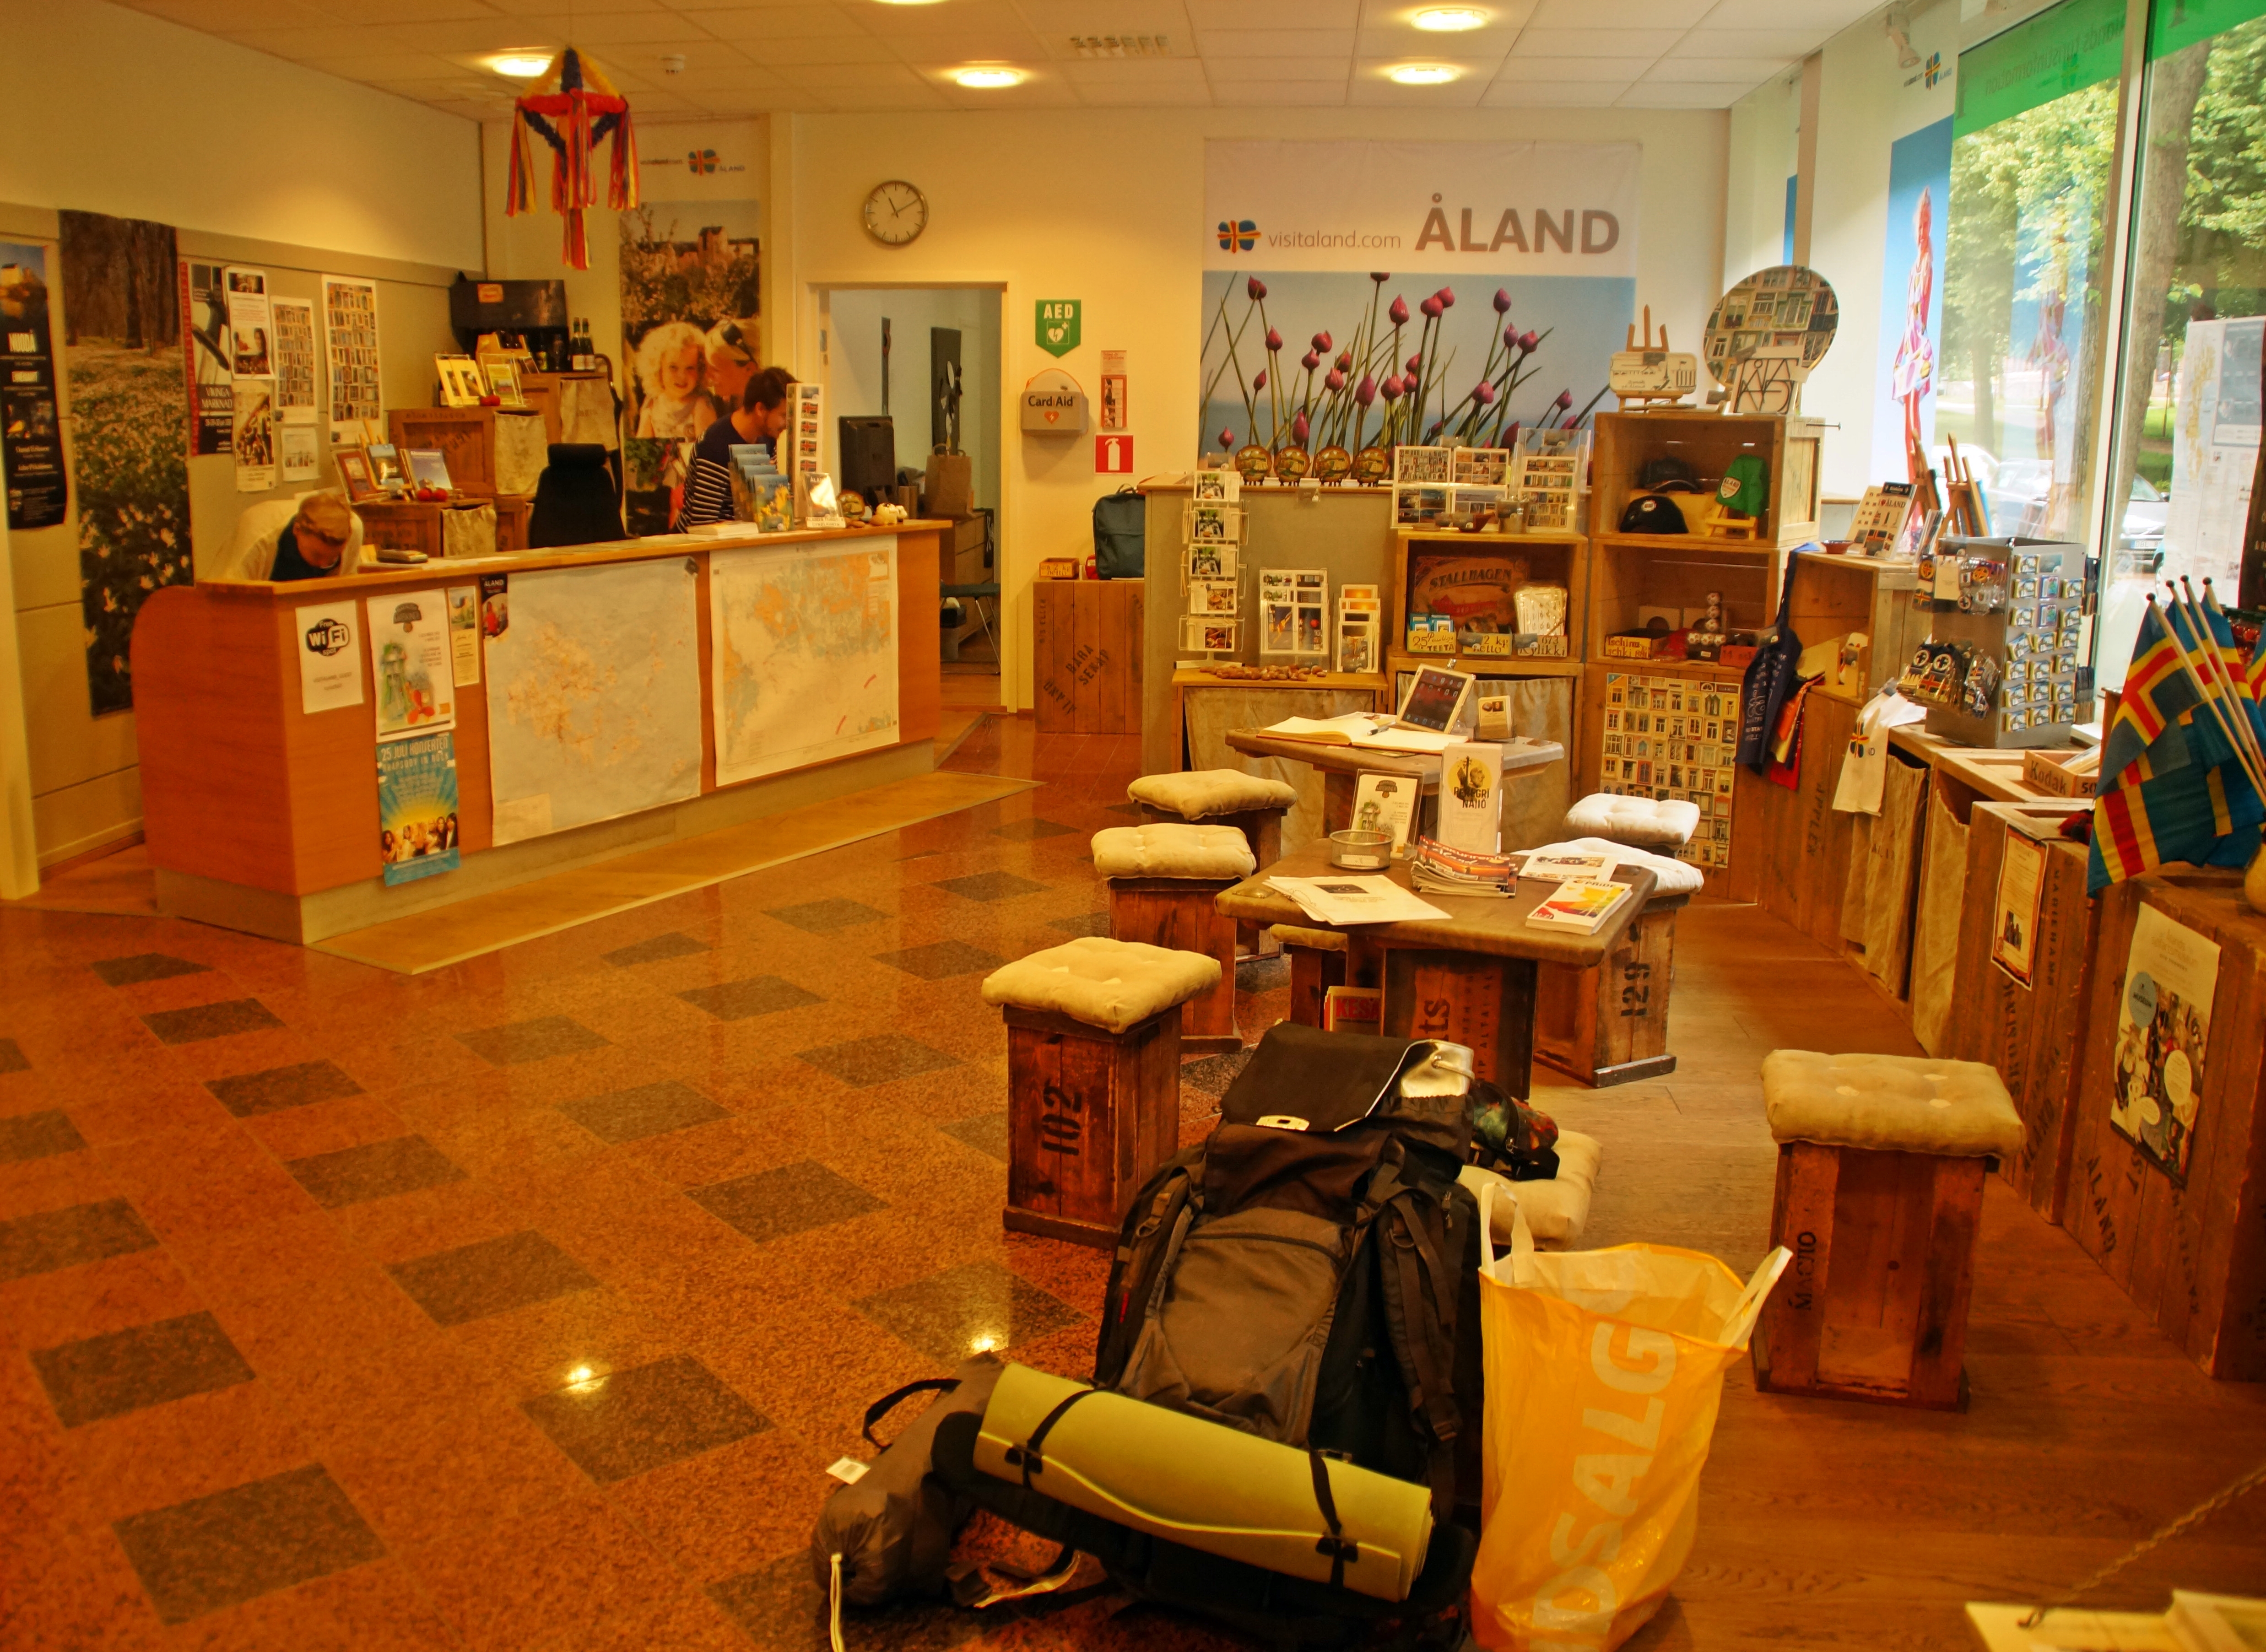 The tourist information center in Mariehamn